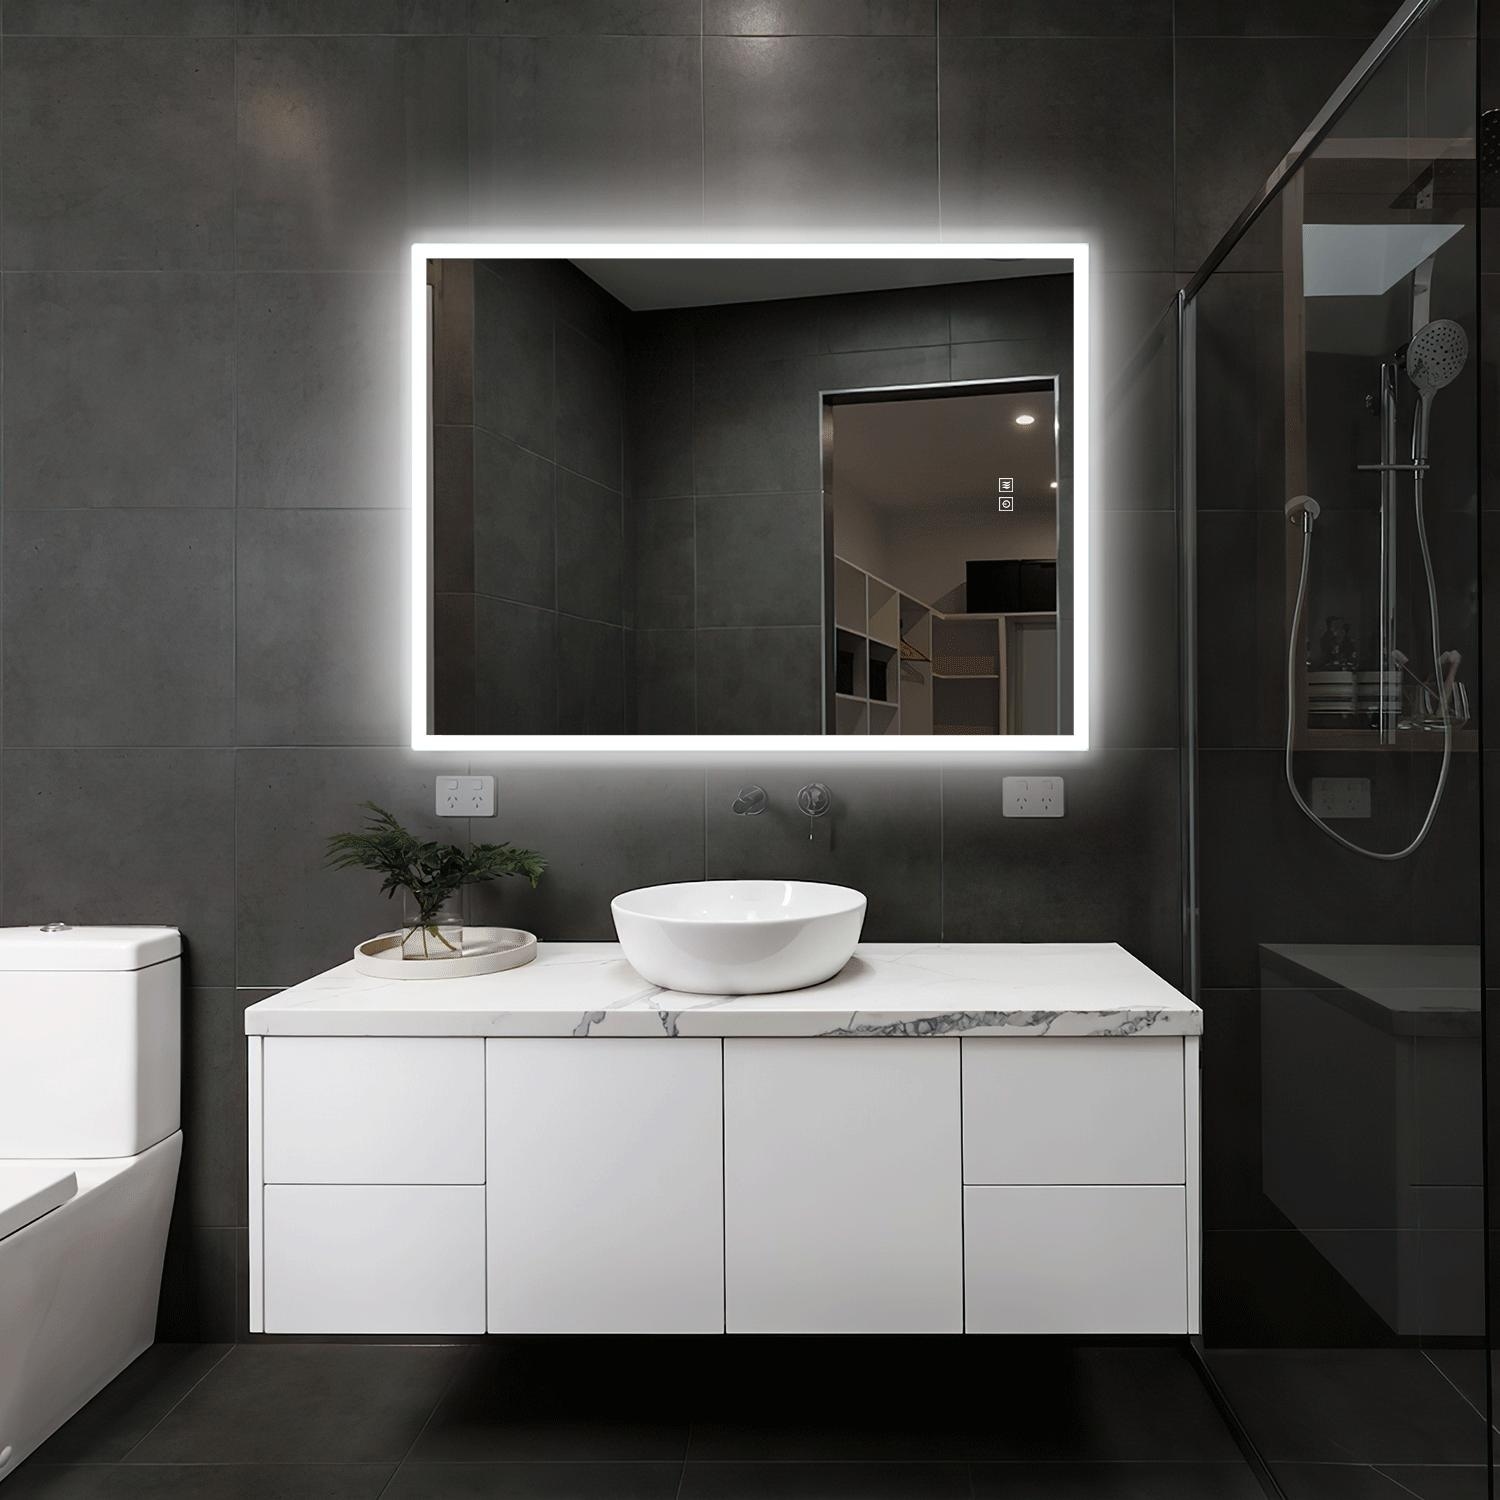 Backlit LED Illuminated Bathroom Anti-Fog Wall Mounted Mirror With Light  On Sale Bed Bath  Beyond 30720825